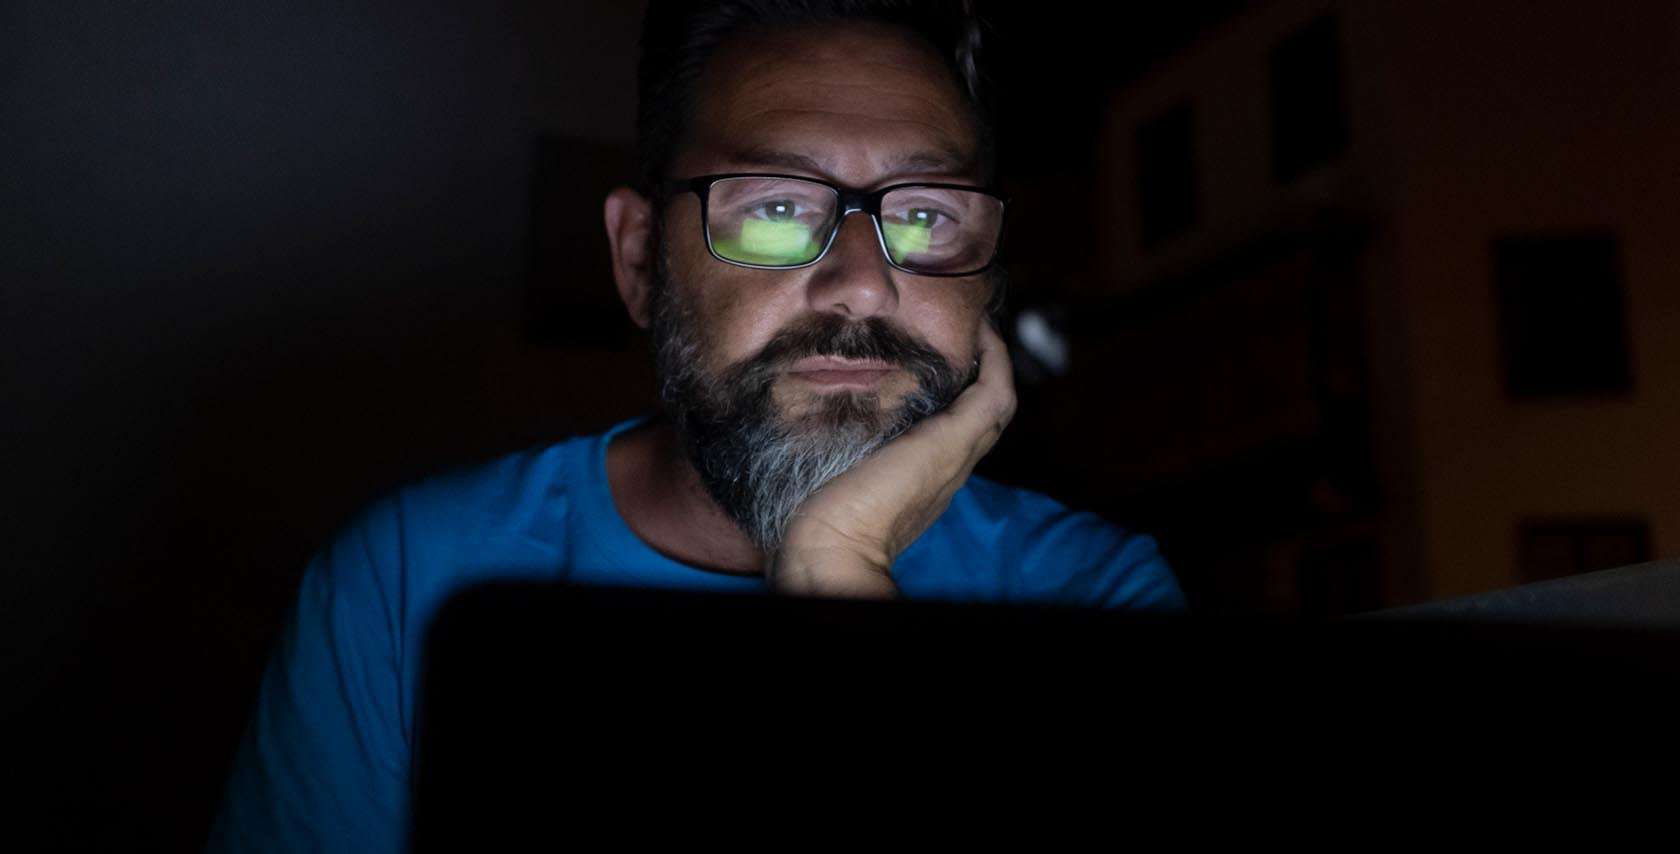 man staring at computer in the dark